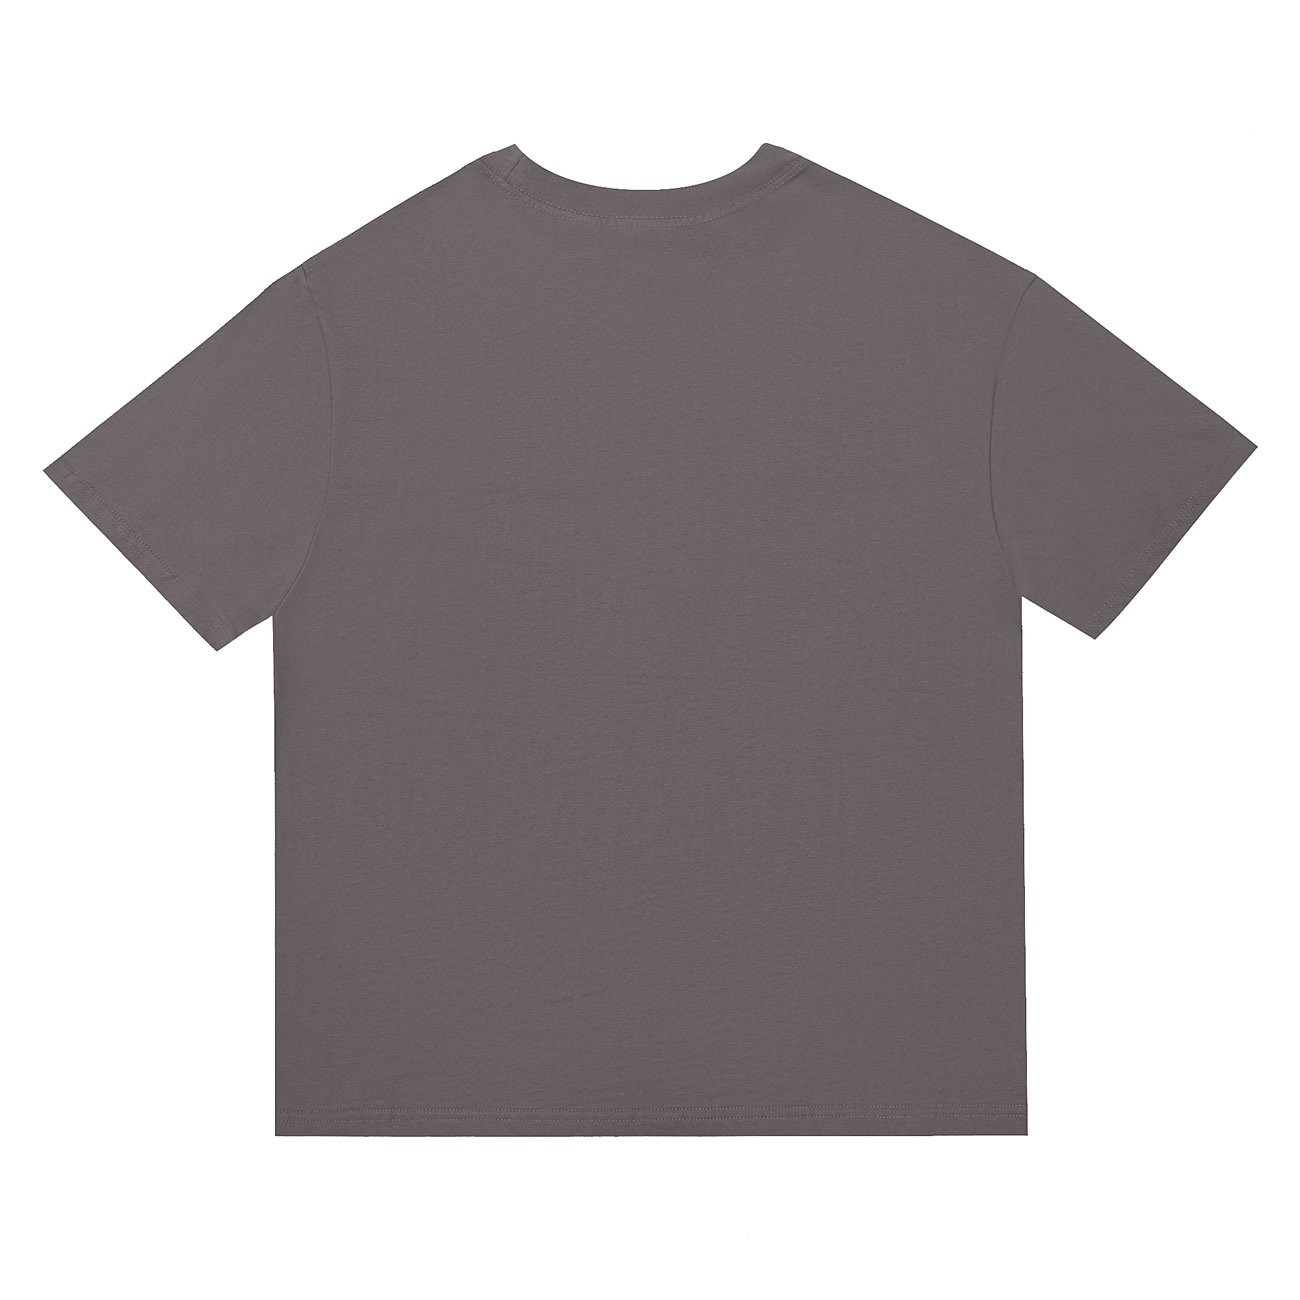 Kanye New T Shirts For Sale Grey (2) - newkick.org